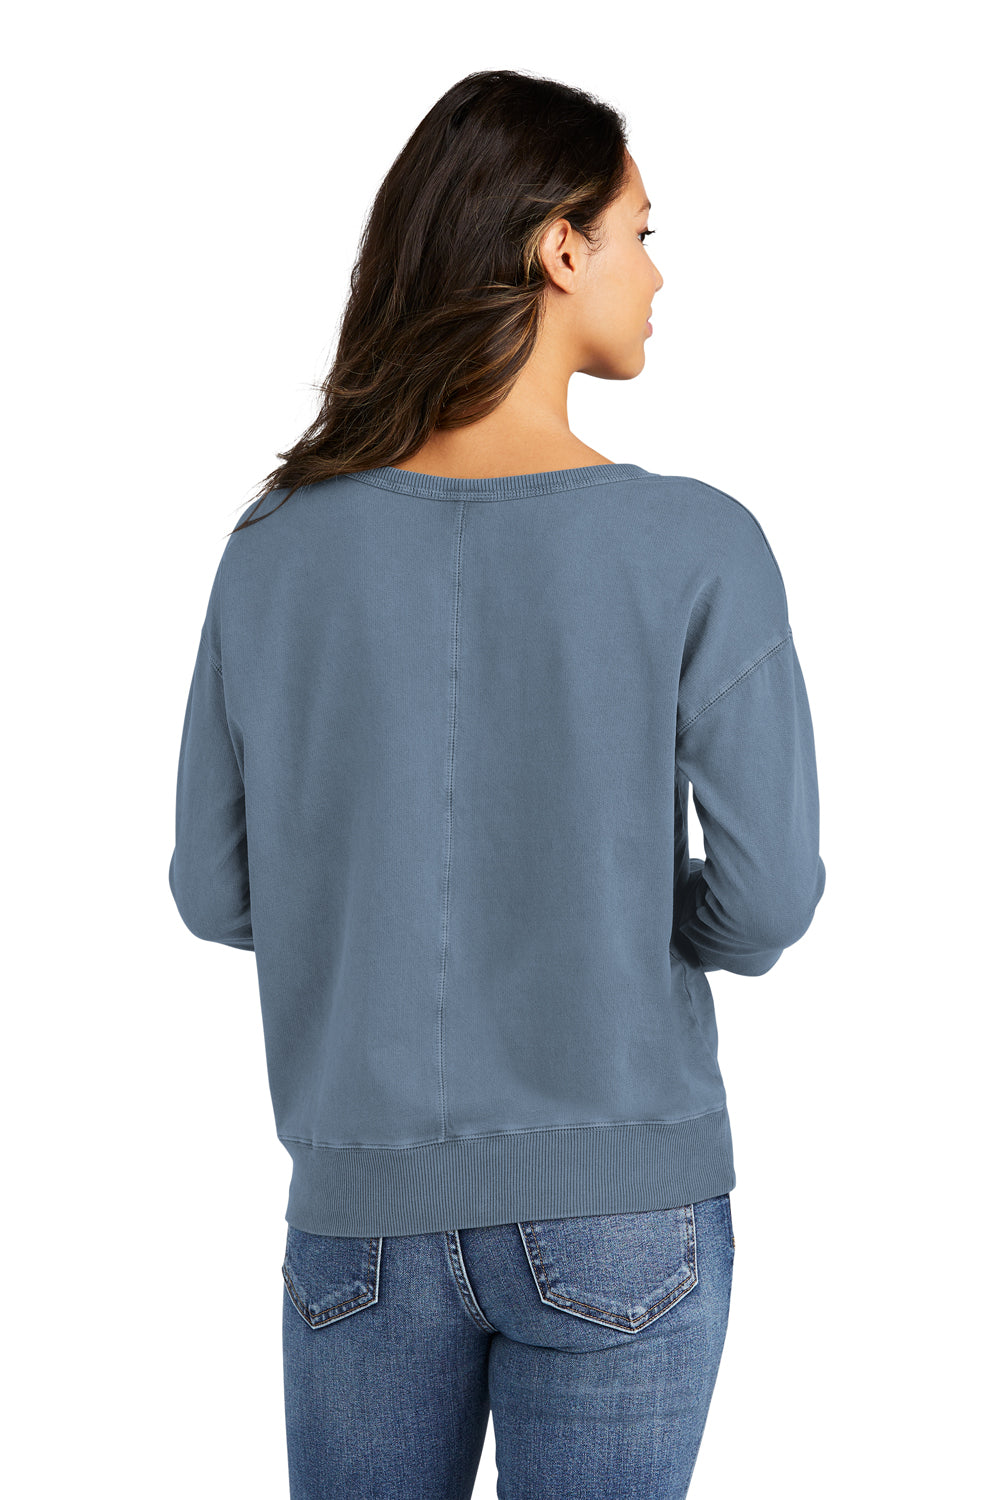 Port & Company LPC098V Womens Beach Wash Garment Dyed V-Neck Sweatshirt Faded Denim Blue Back